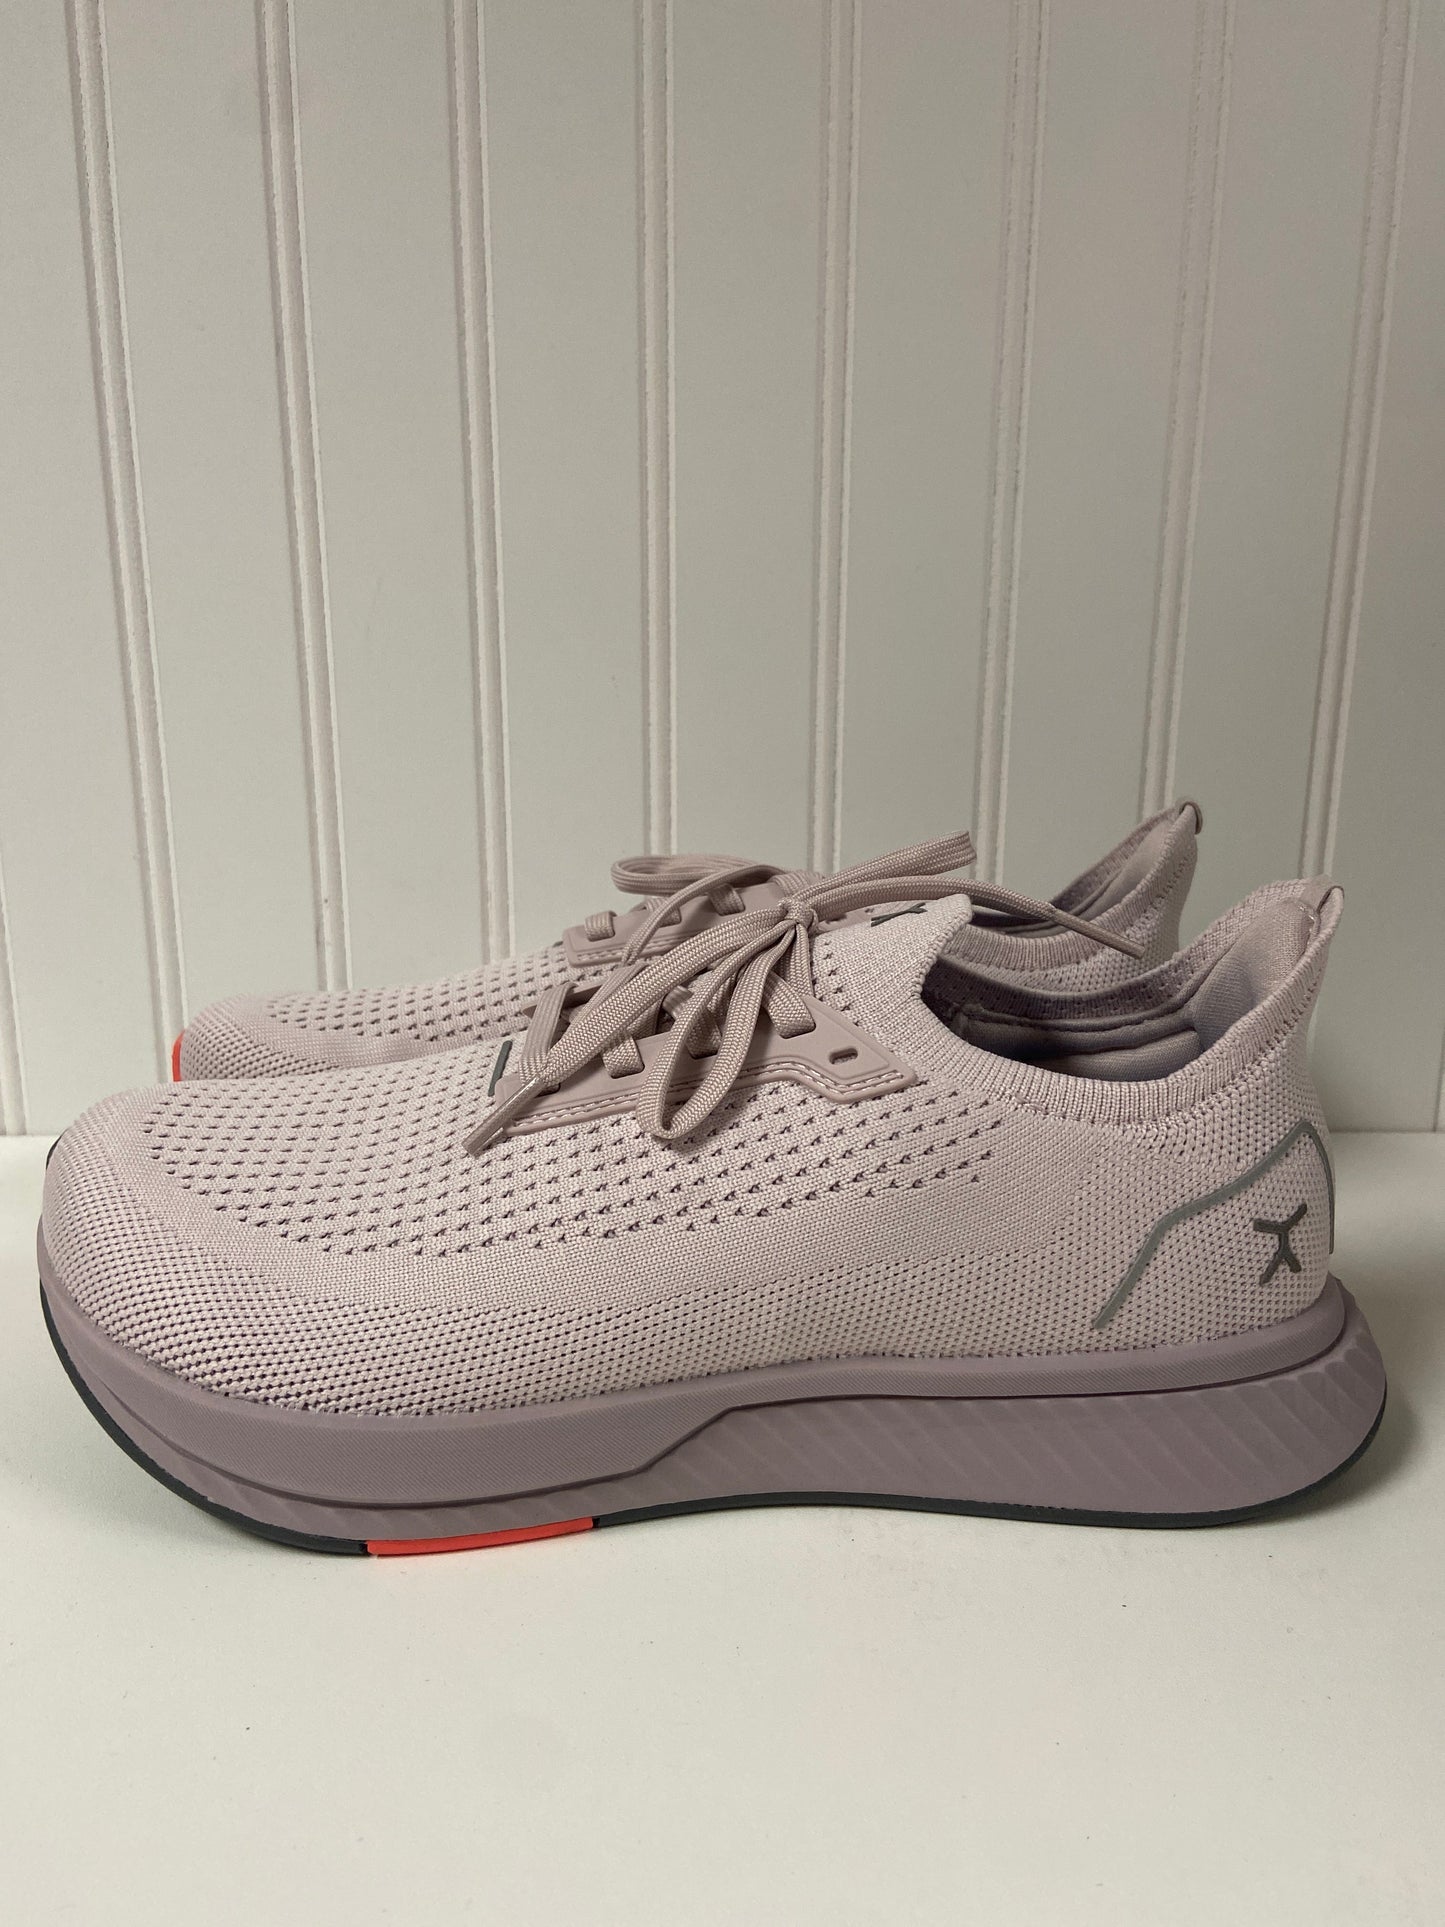 Purple Shoes Athletic Clothes Mentor, Size 7.5